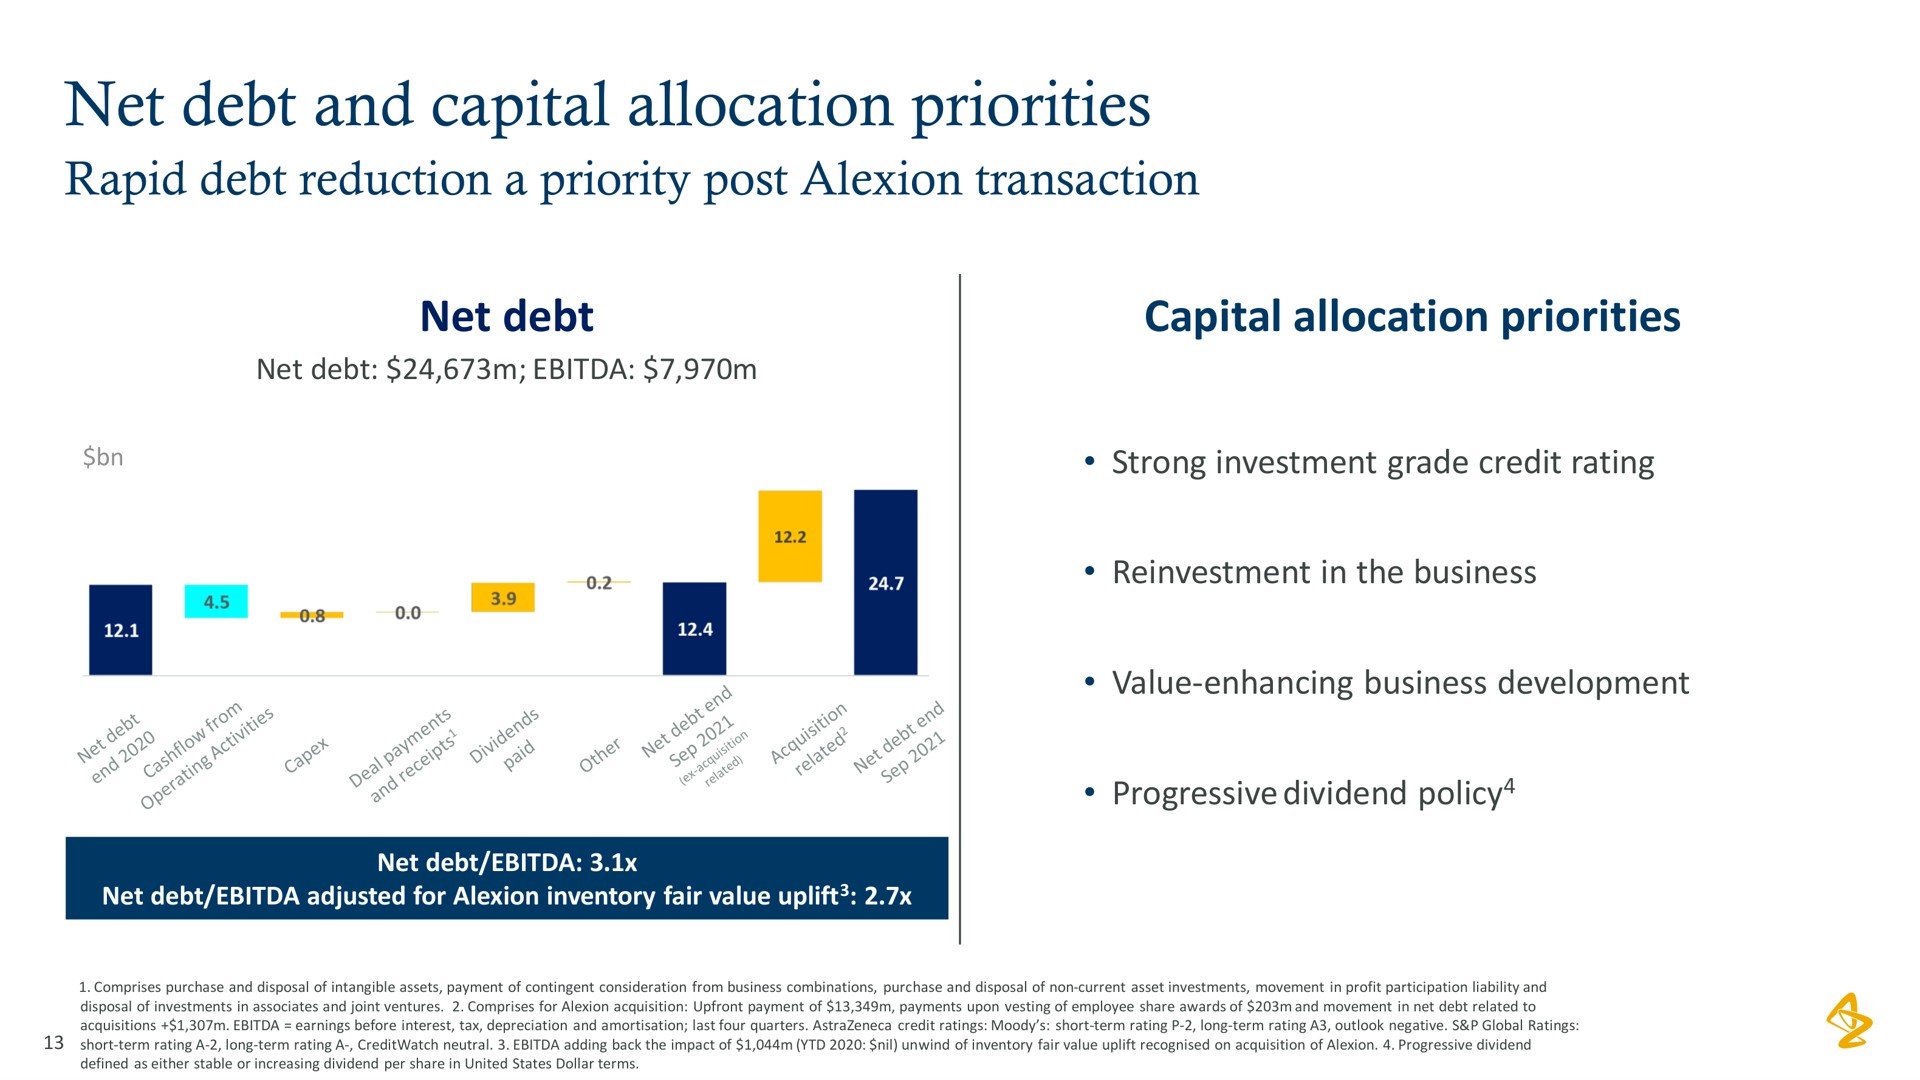 net debt and capital allocation priorities | AstraZeneca